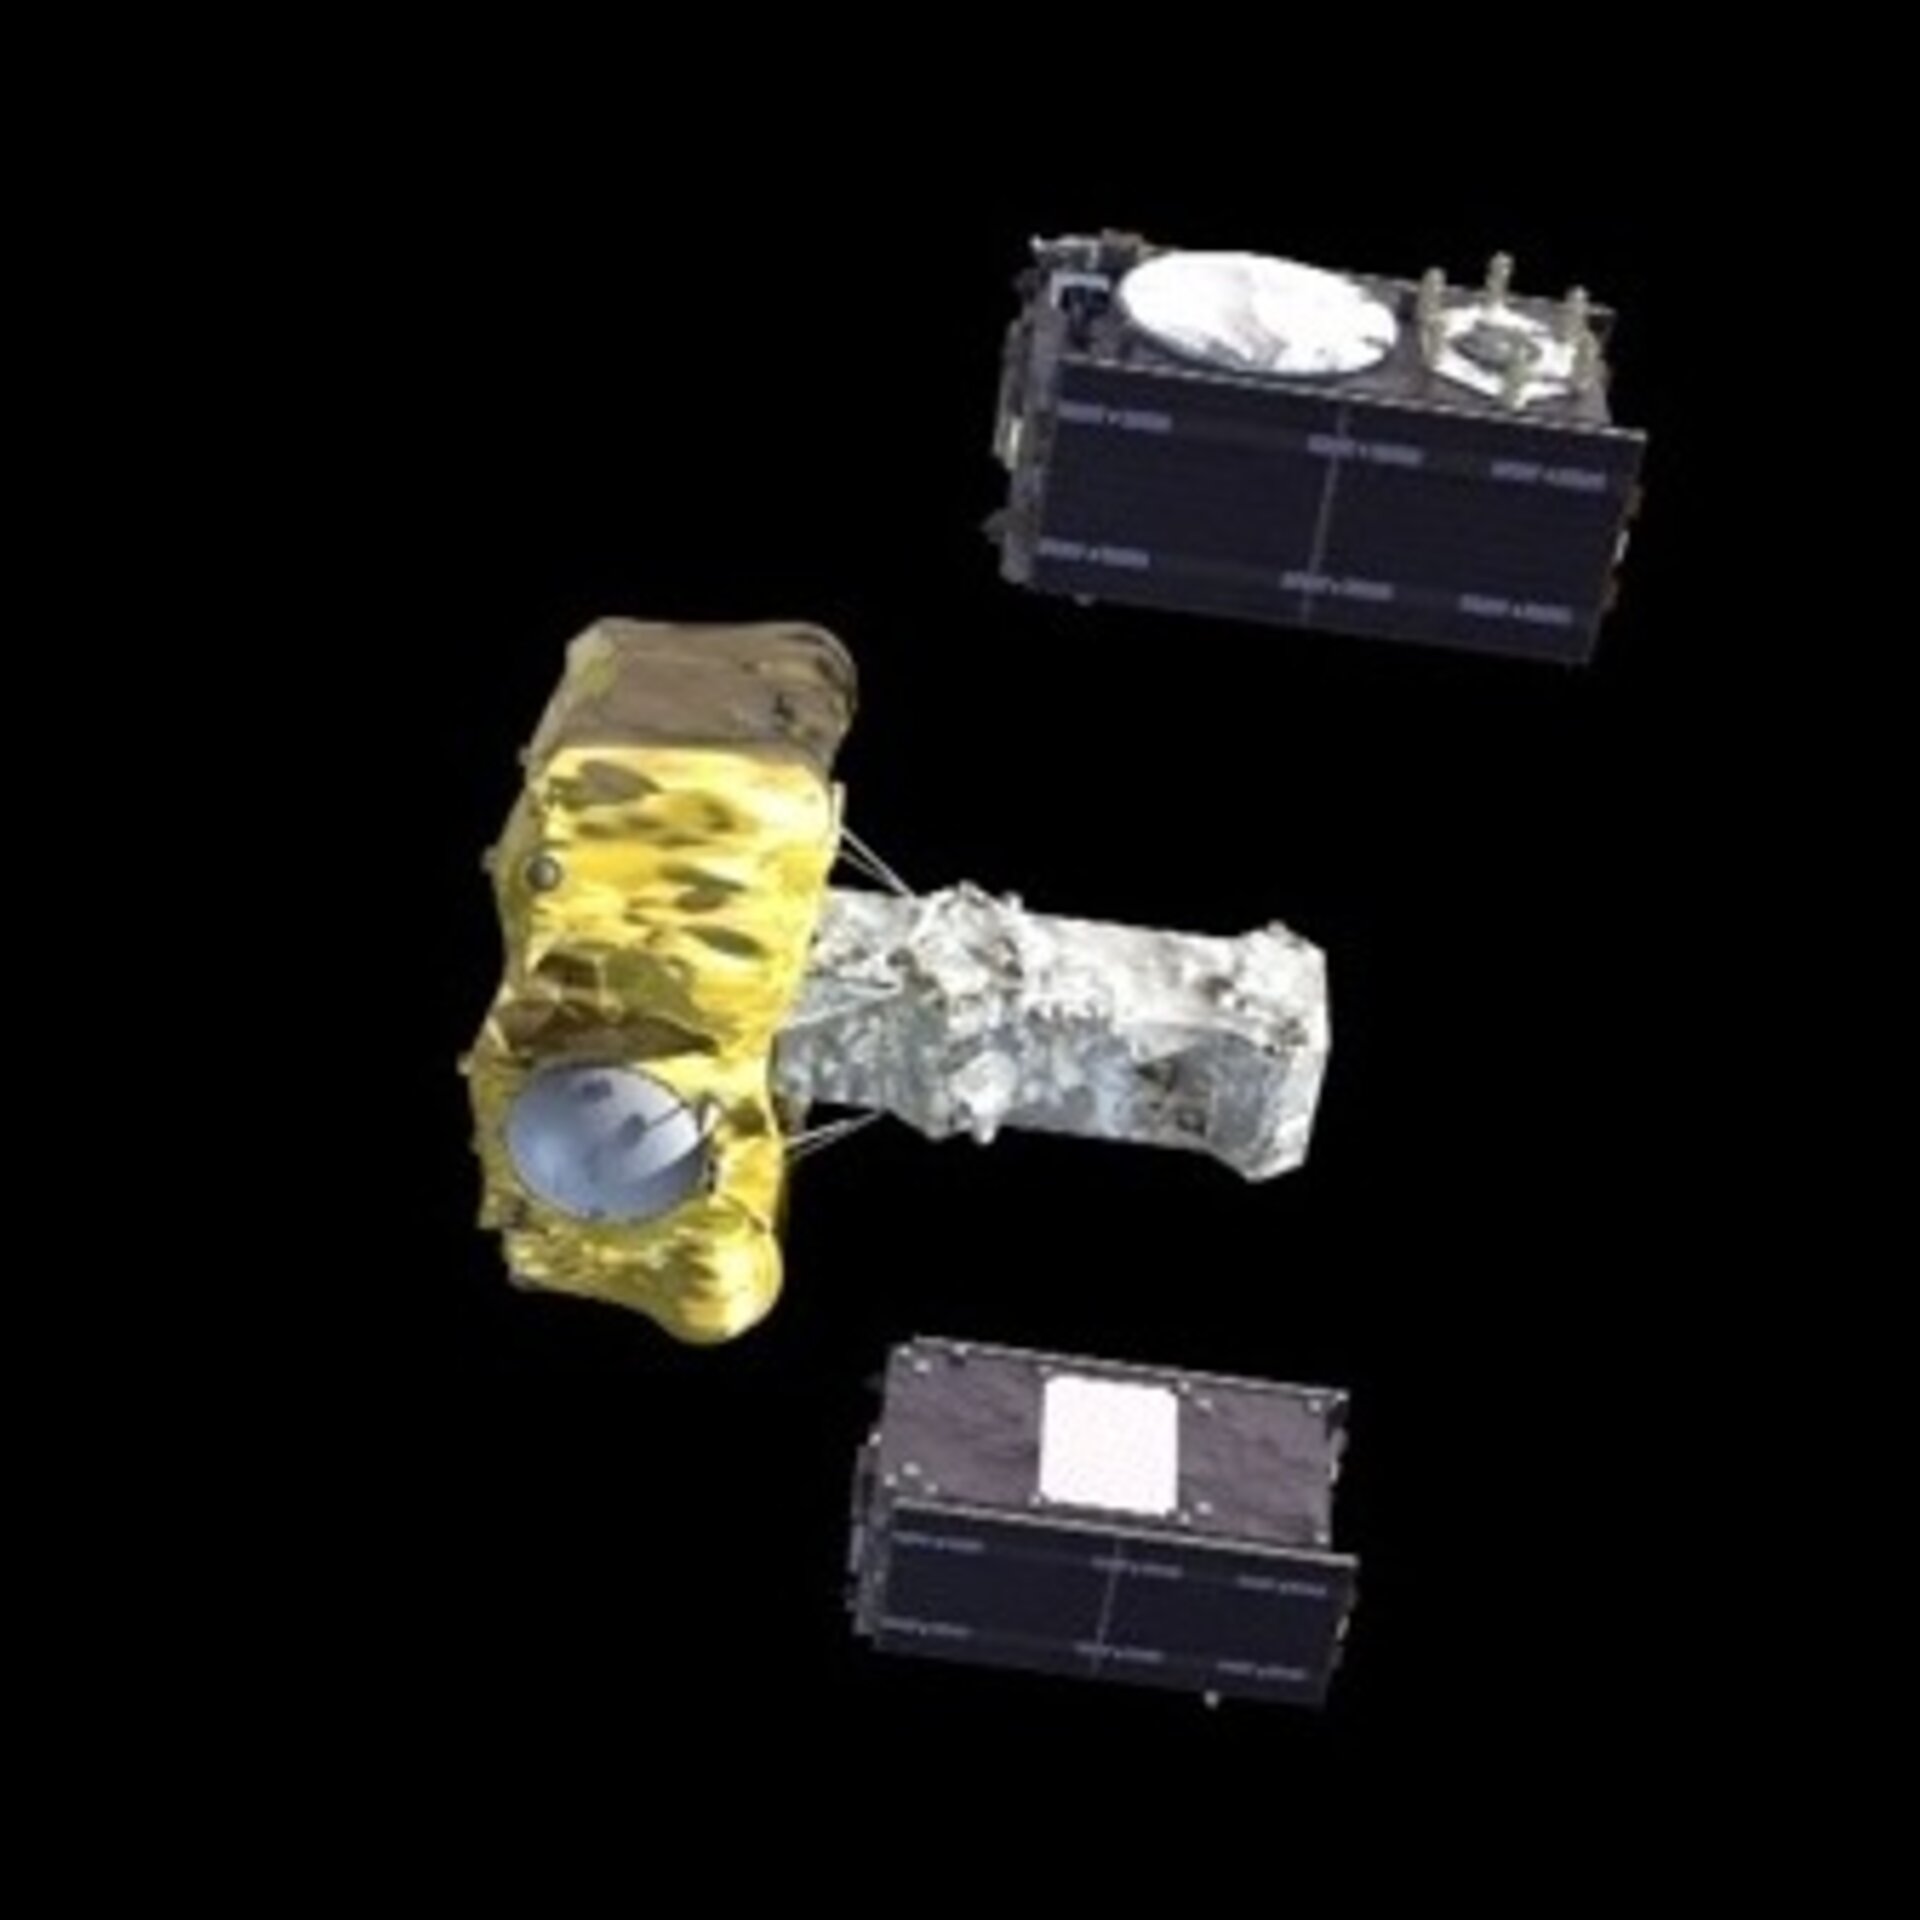 Galileo satellites separate